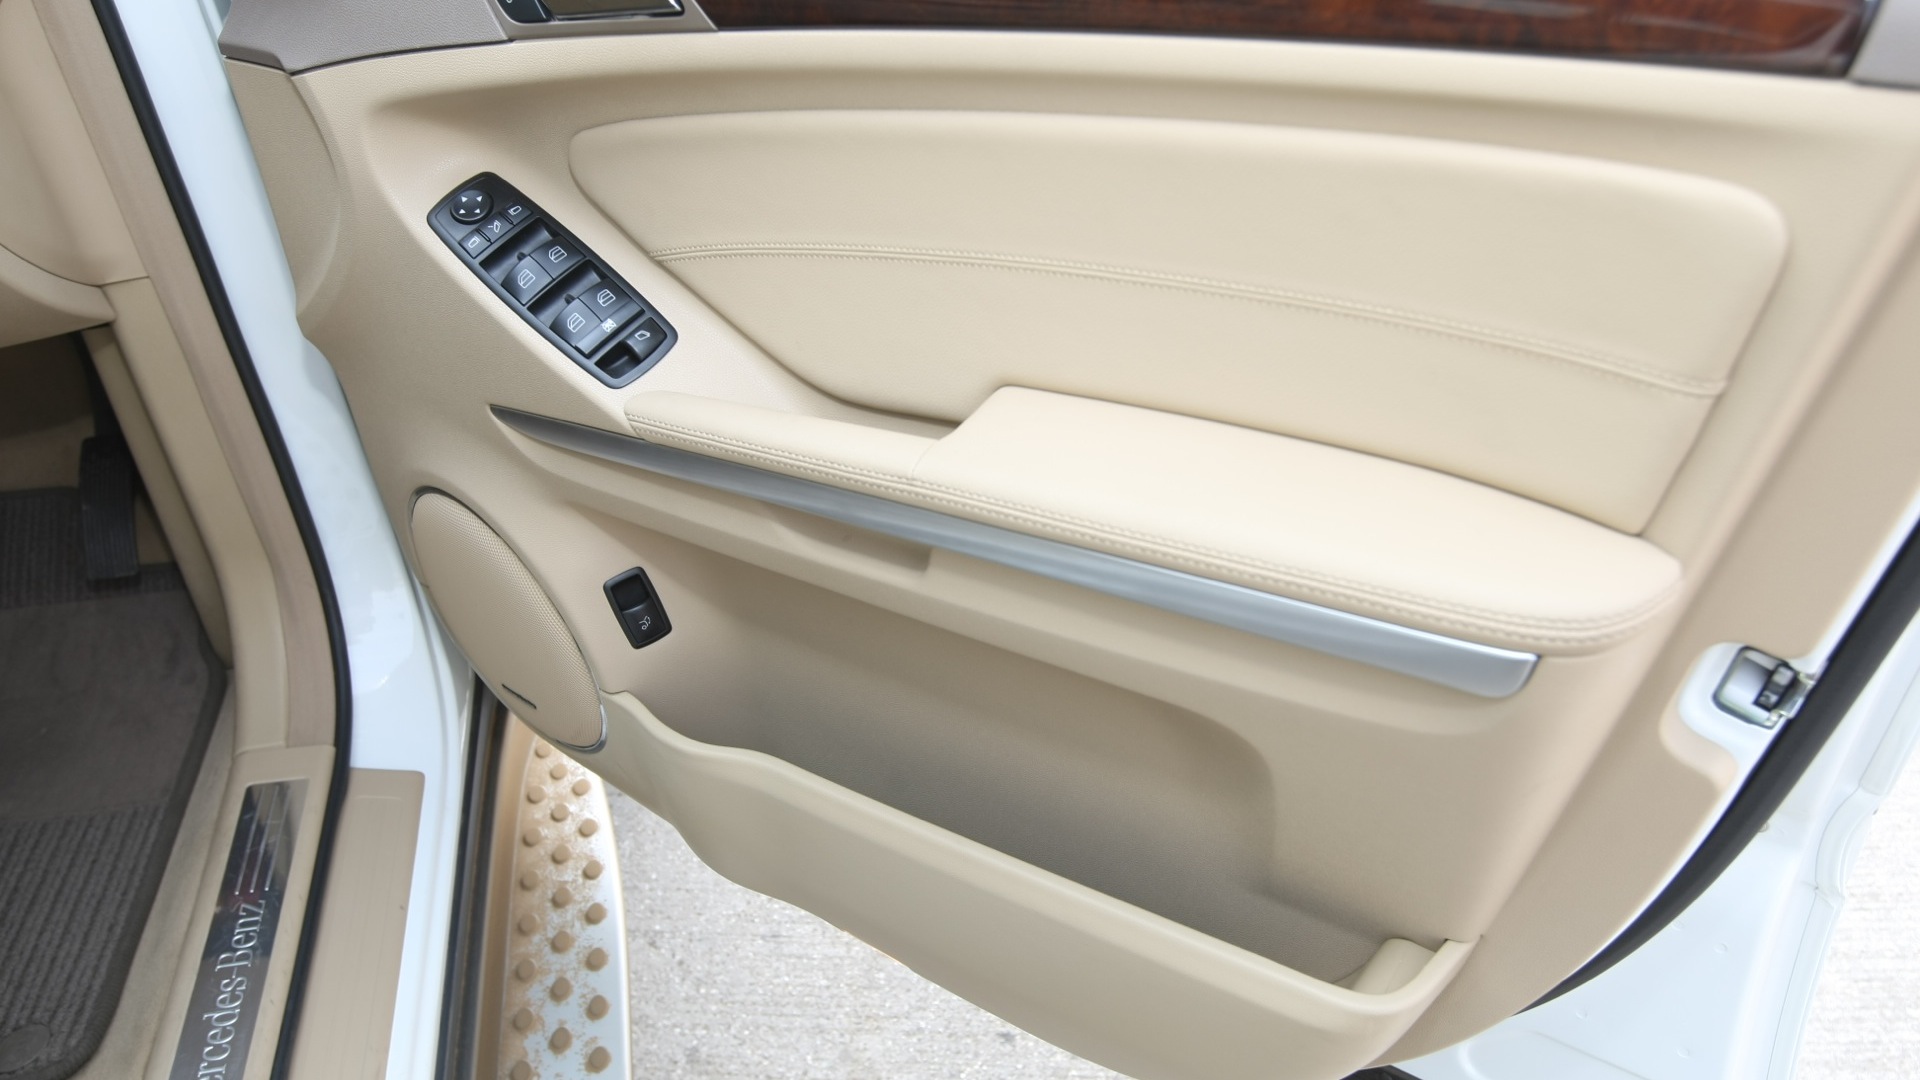 Mercedesbenz-GL-class-2013-GL-350-CDI-Executive-Interior